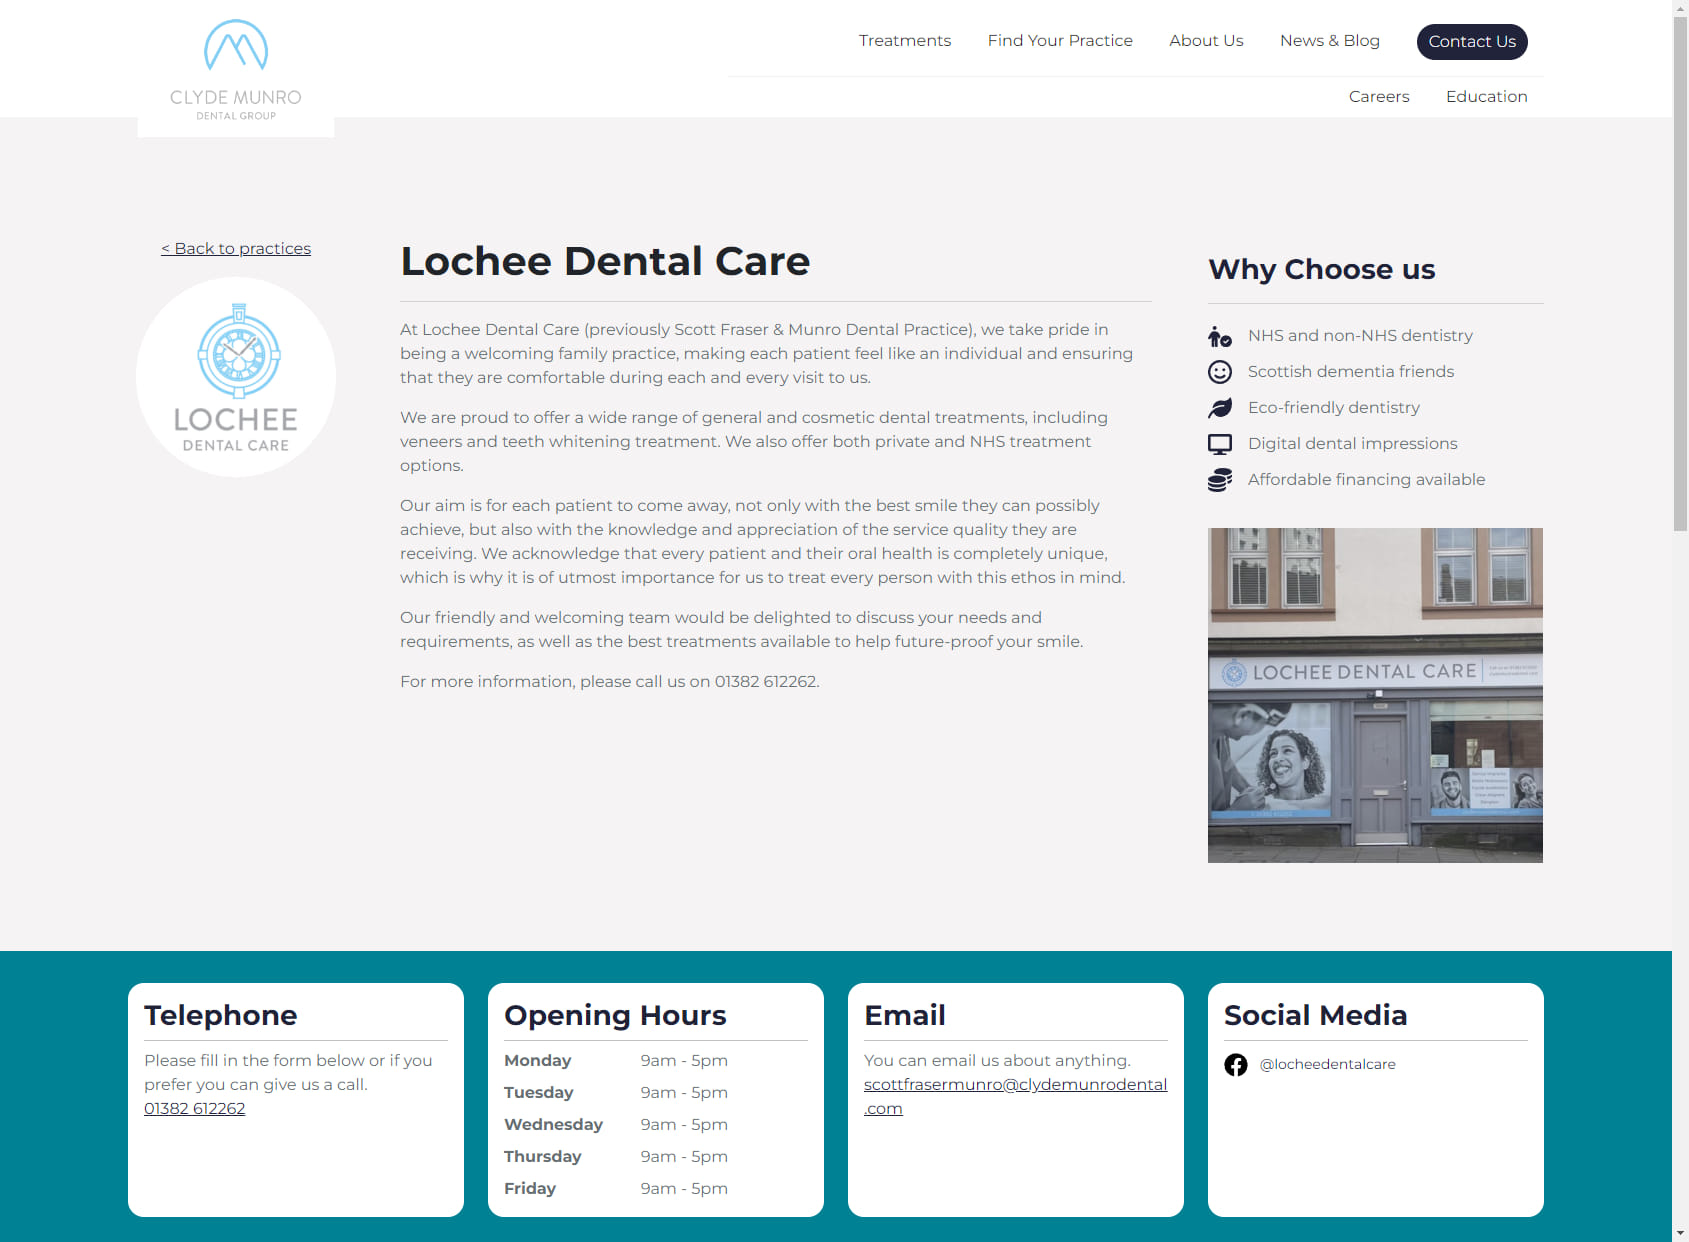 Lochee Dental Care